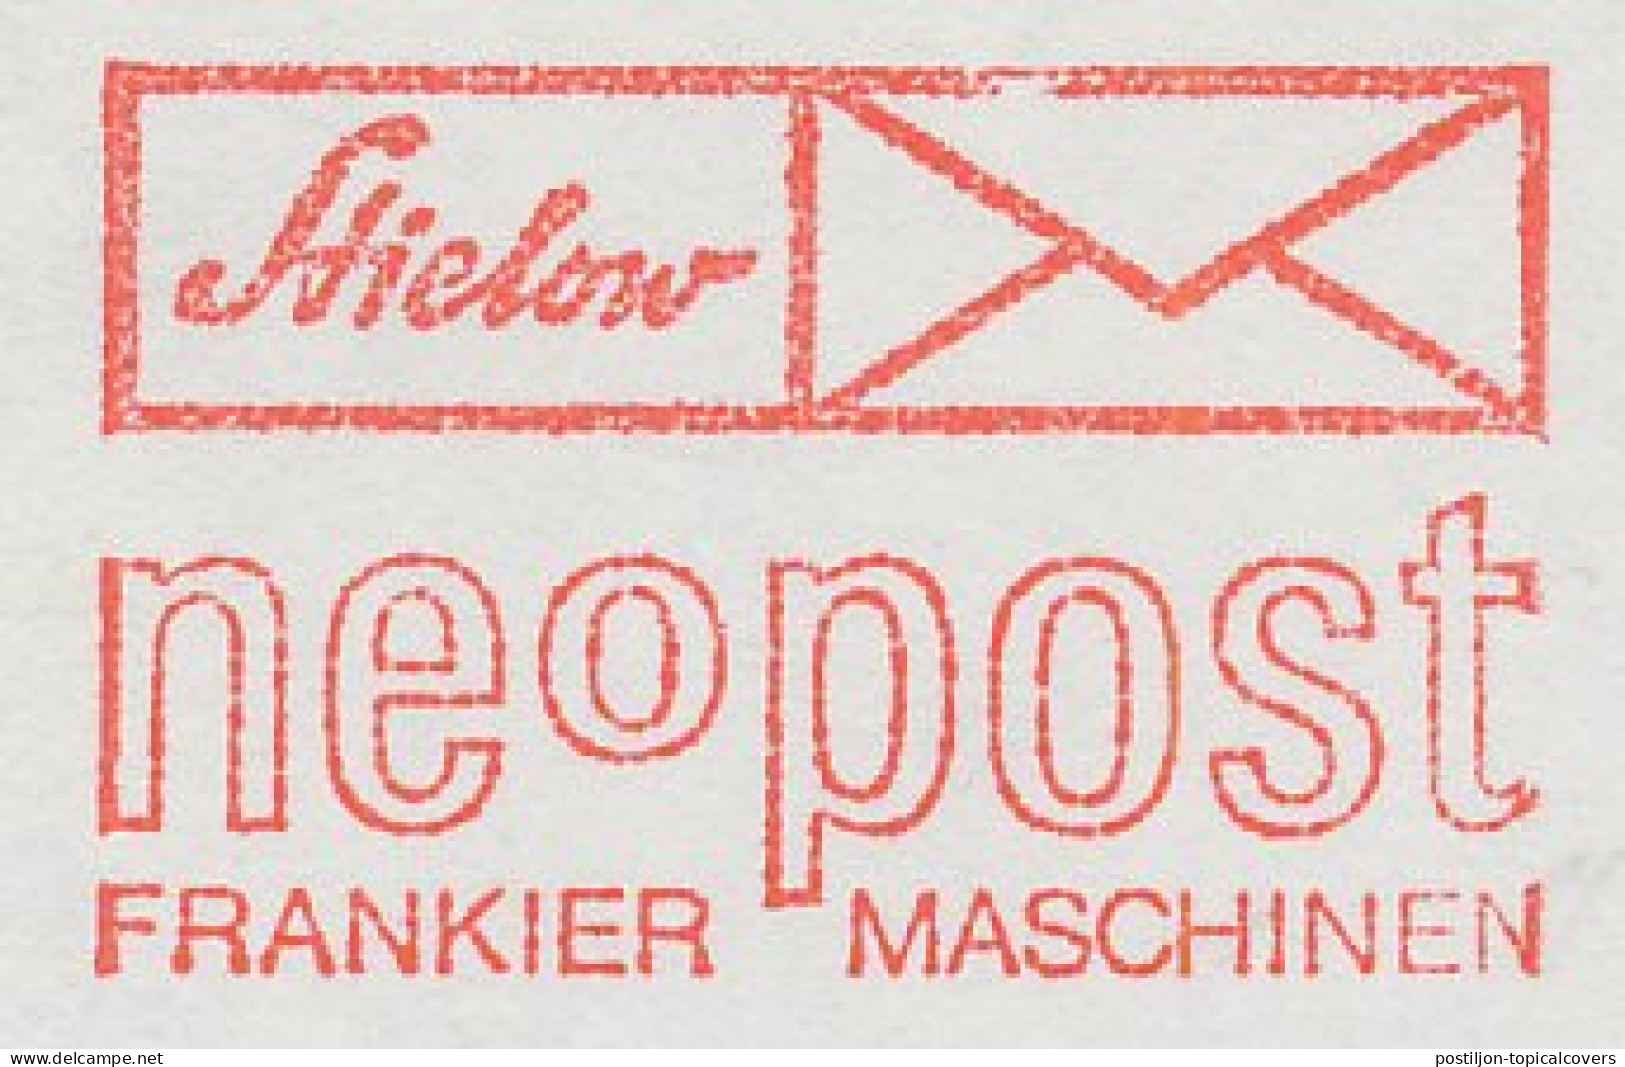 Meter Cut Germany 1986 Neopost - Timbres De Distributeurs [ATM]